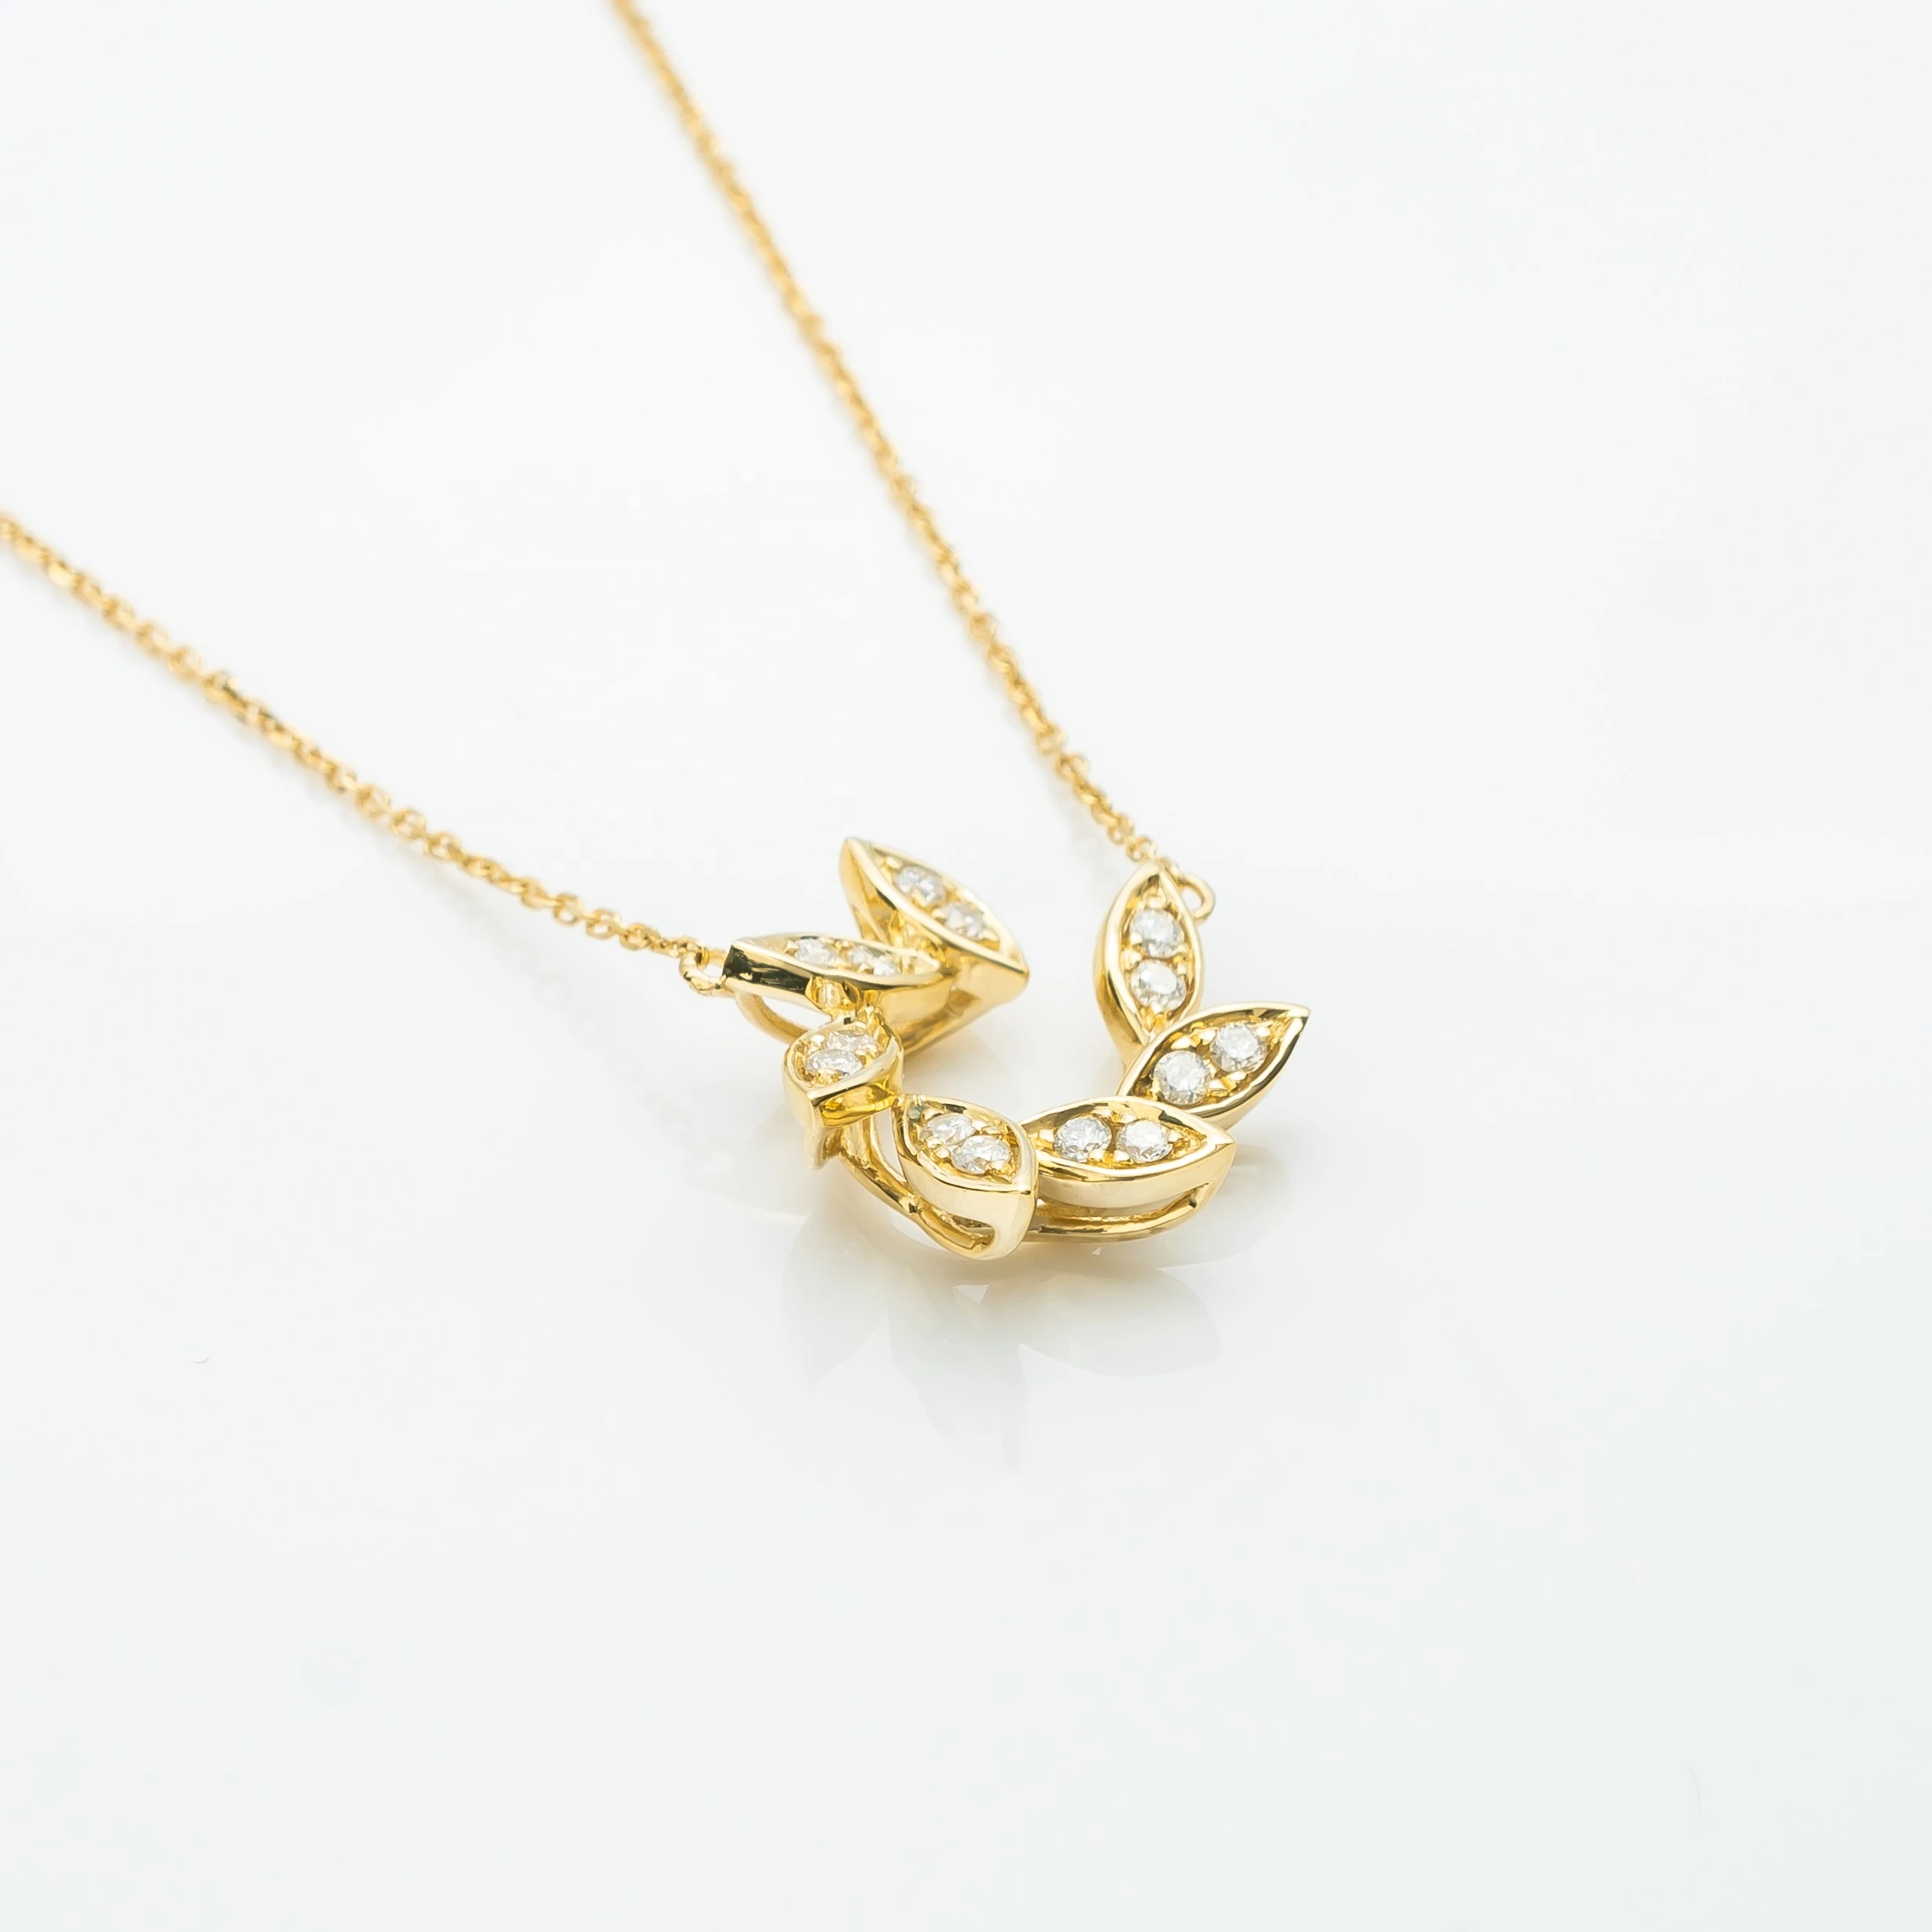 Natural diamond 14K Solid Gold Pendant Necklace Ladies stylish design Handmade Jewelry